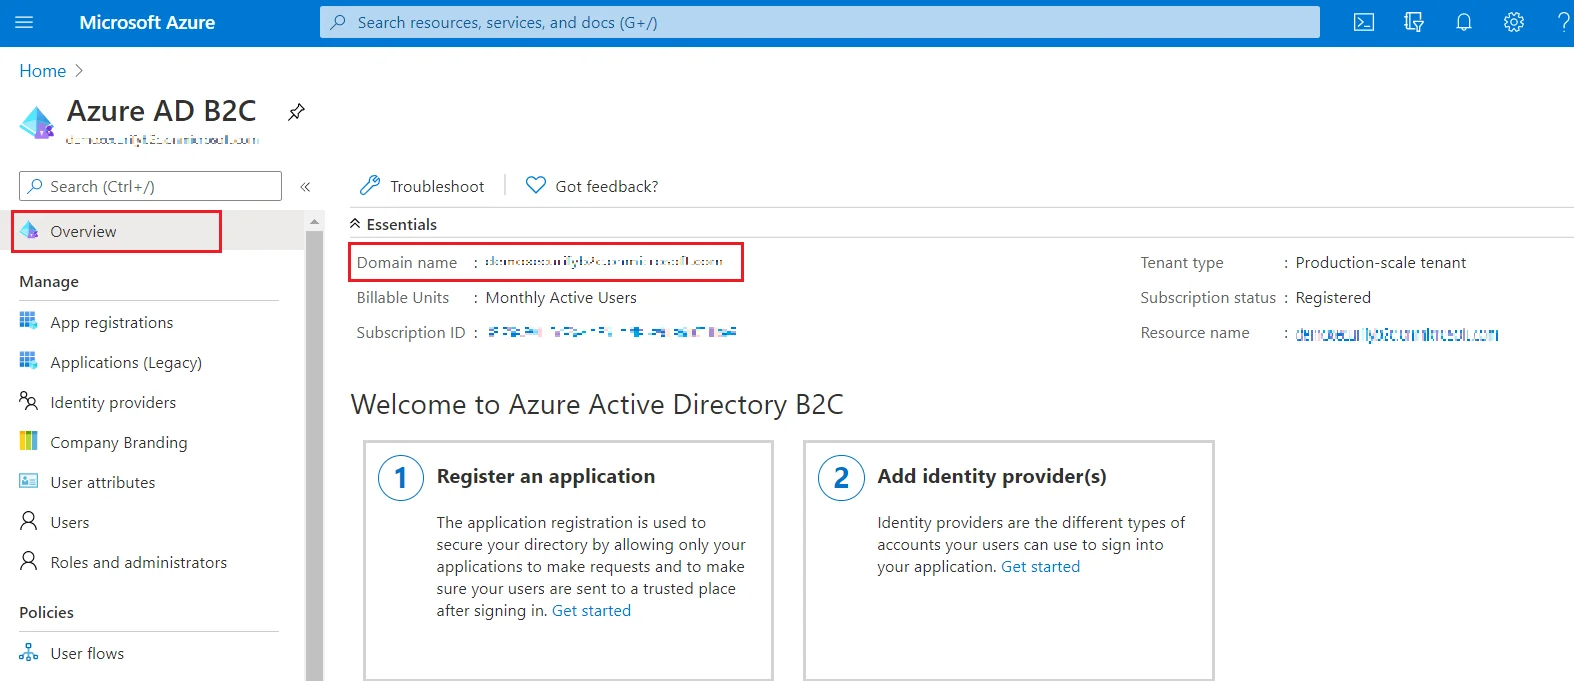 nopCommerce Azure B2C SSO - nopCommerce Single Sign-On (SSO) using Azure B2C as IDP - B2C tenant ID Reco